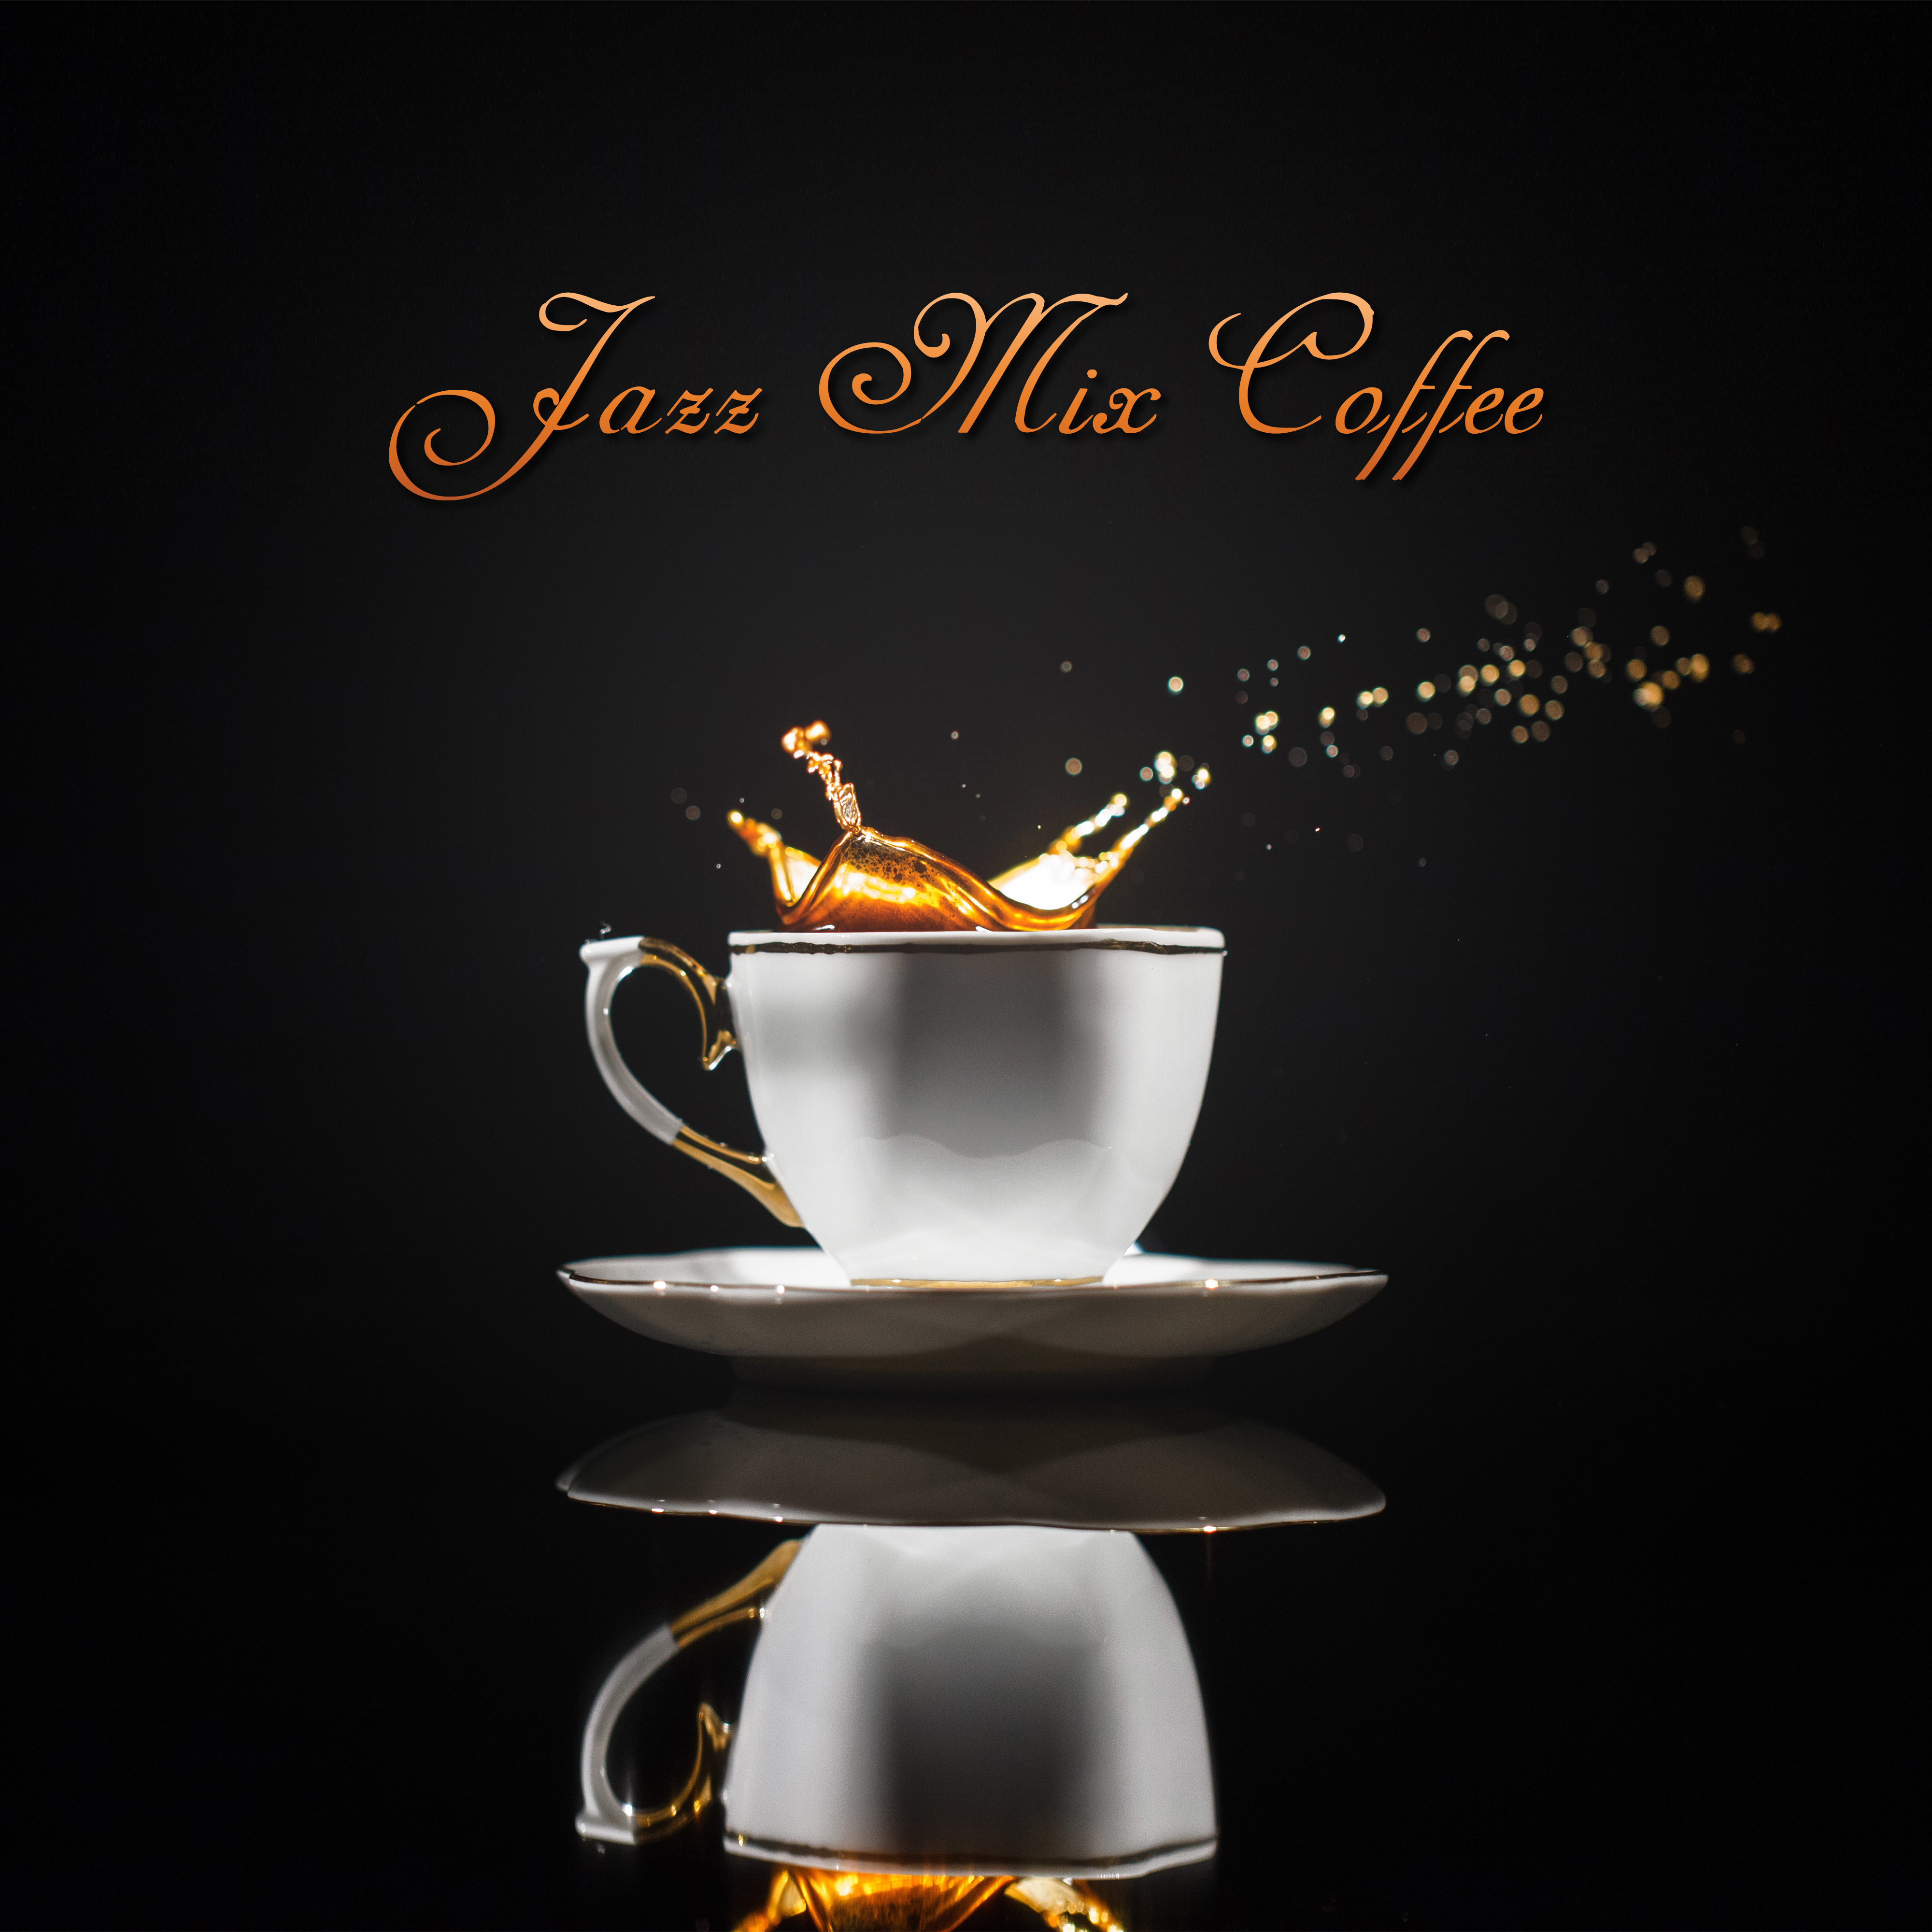 Jazz Mix Coffee – Instrumental Jazz Music Ambient, Smooth Music for Coffee, Restaurant, Jazz Lounge, Classical Jazz at Night